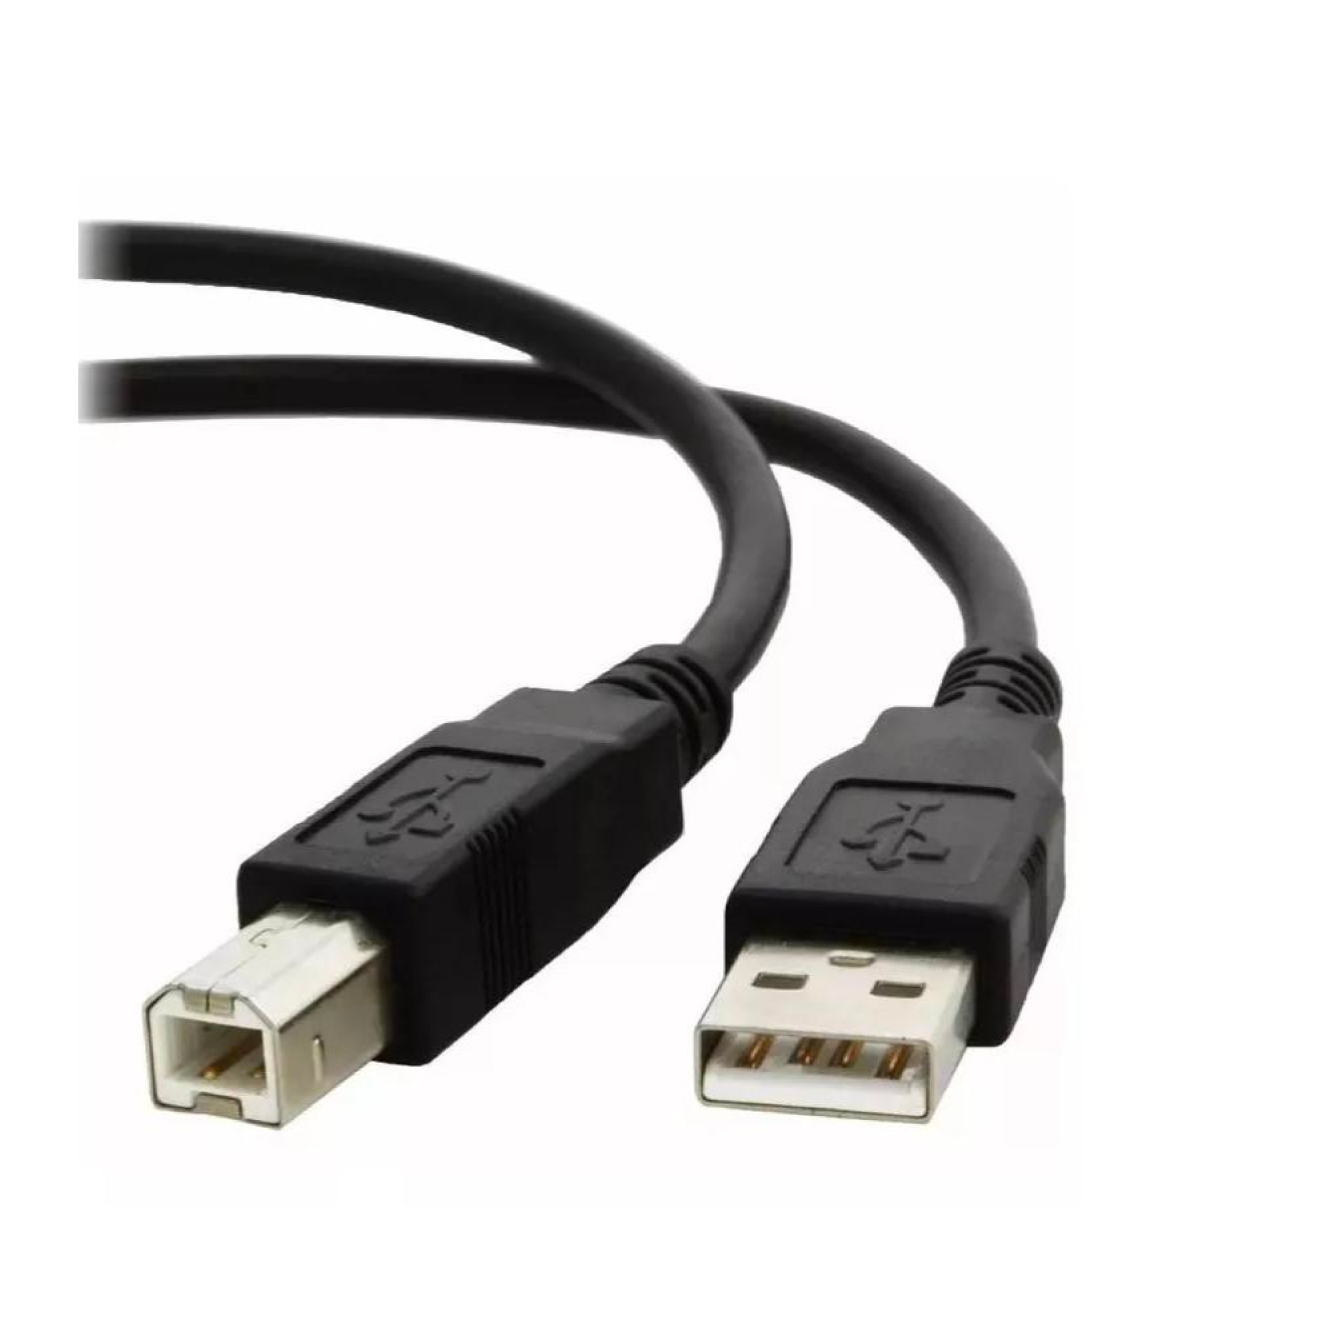 Cable USB para Impresora A Male a B Male 3.0 - Intelite Guatemala